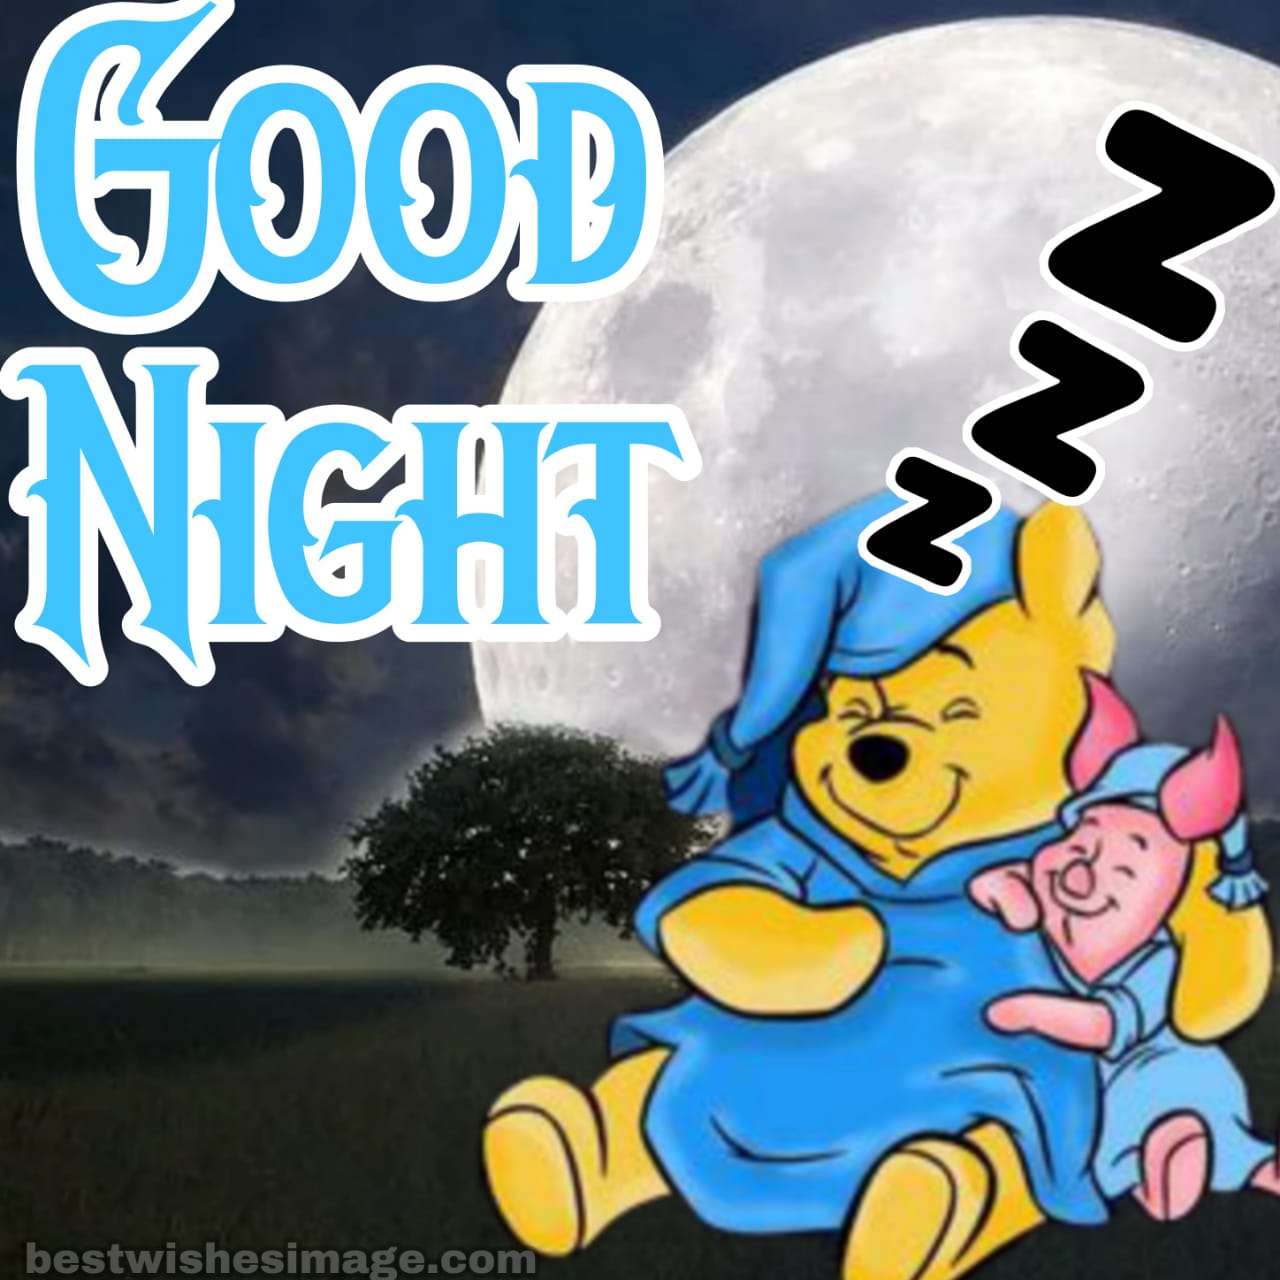 Animated Good Night Cartoon Images - Jack Frost